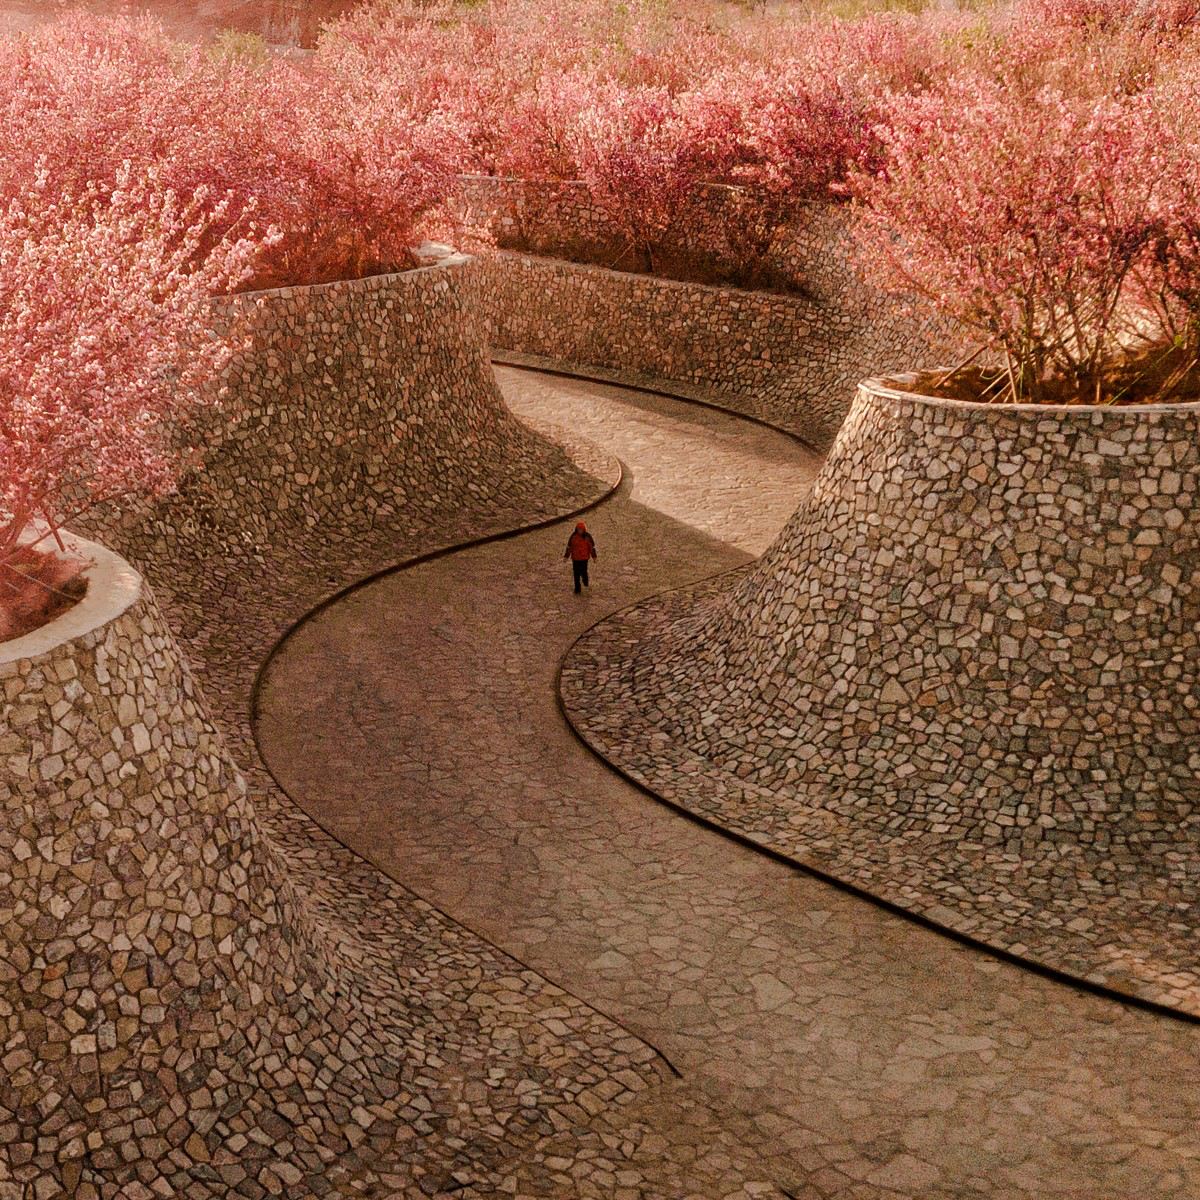 Rizhao Bailuwan Cherry Blossom Town Art and Cultural Space by Hu Sun